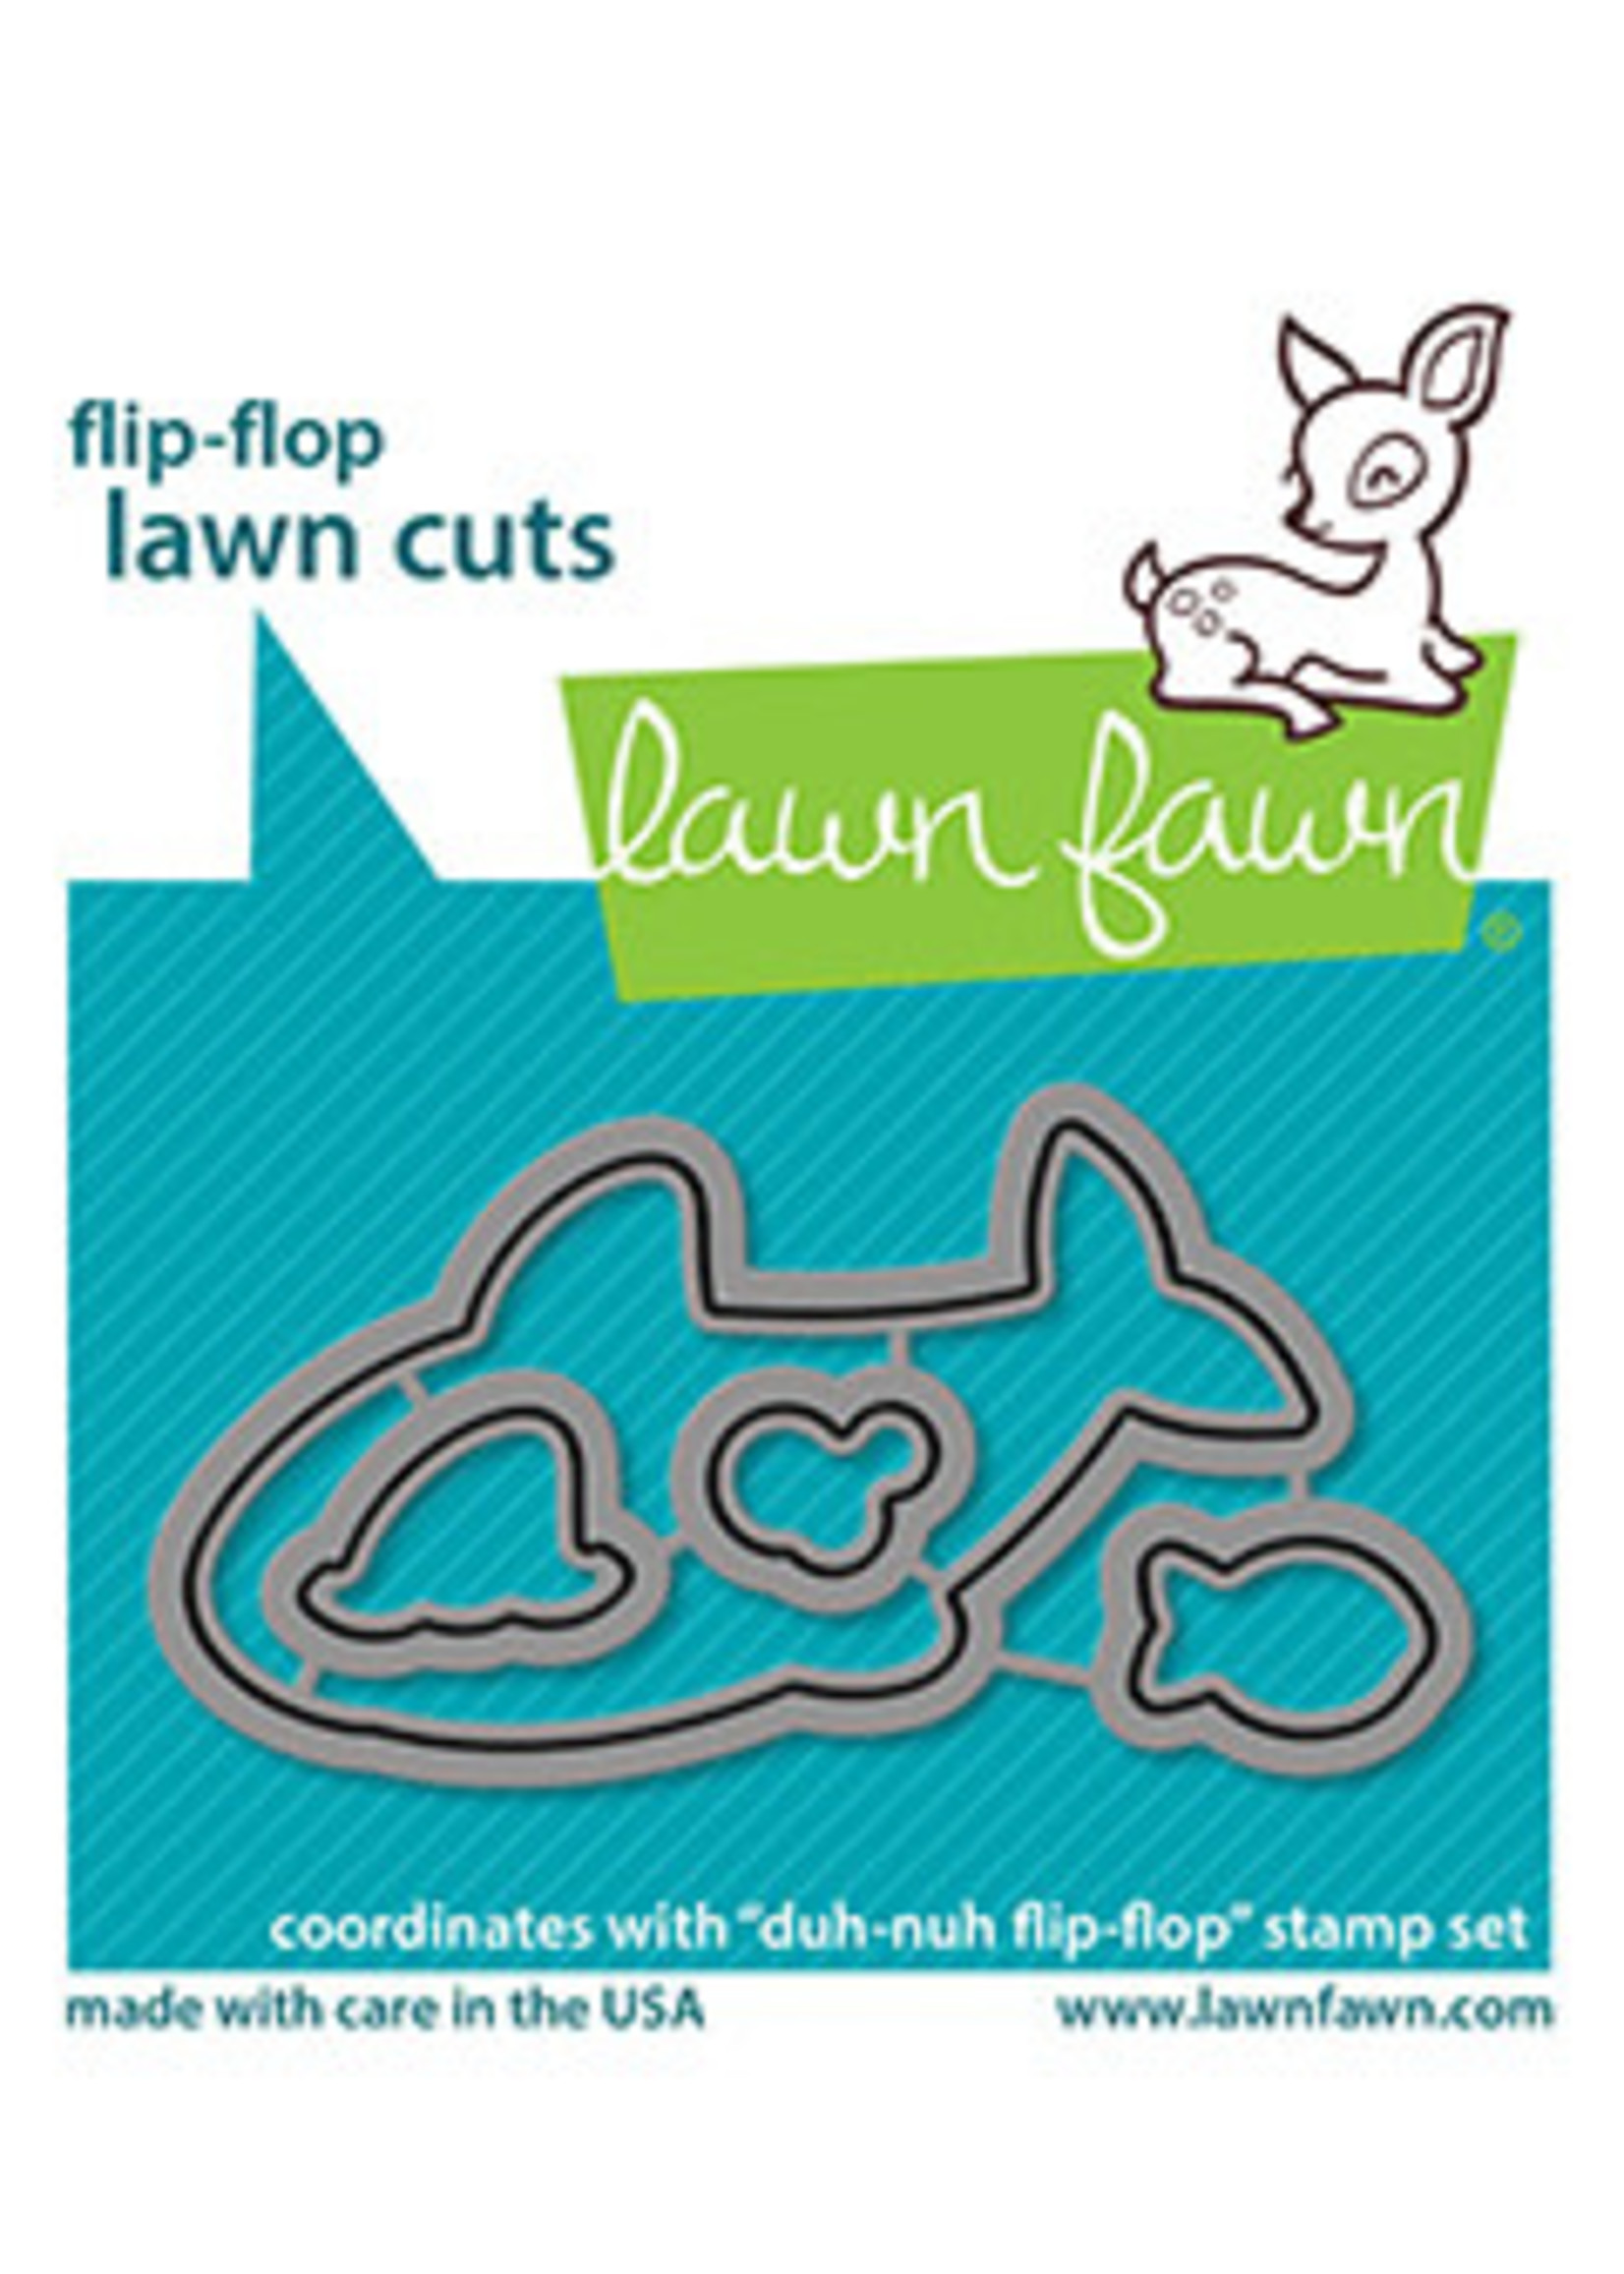 Lawn Fawn duh-nuh flip-flop die